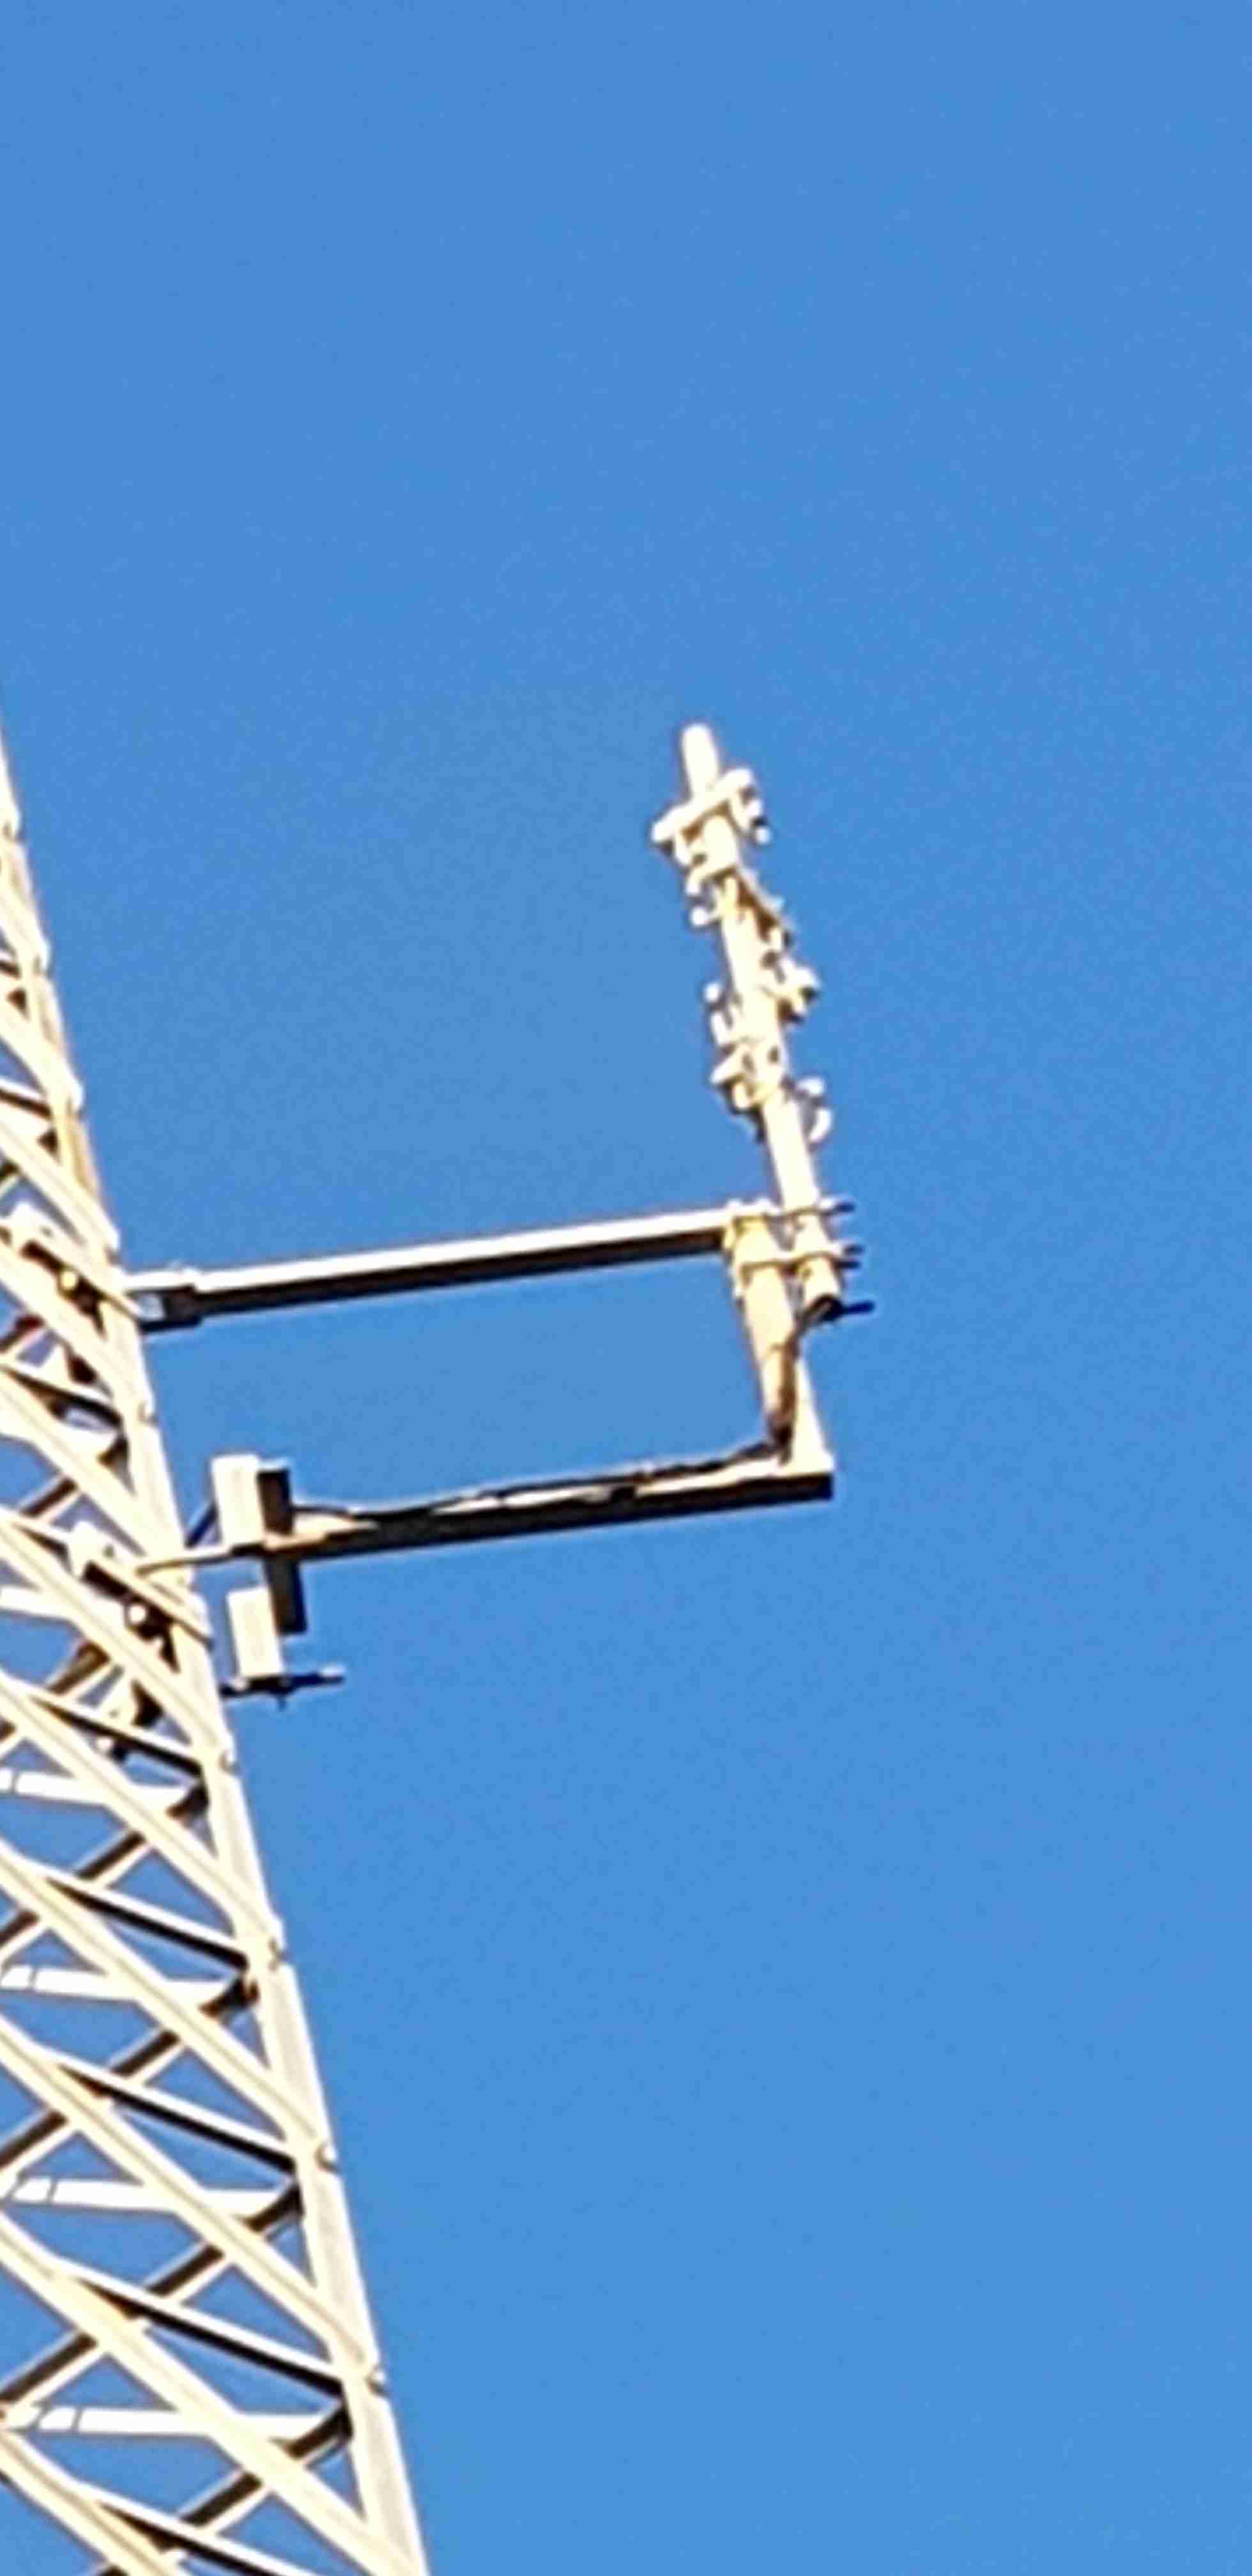 Antennas-2018-08-03-16.42.45